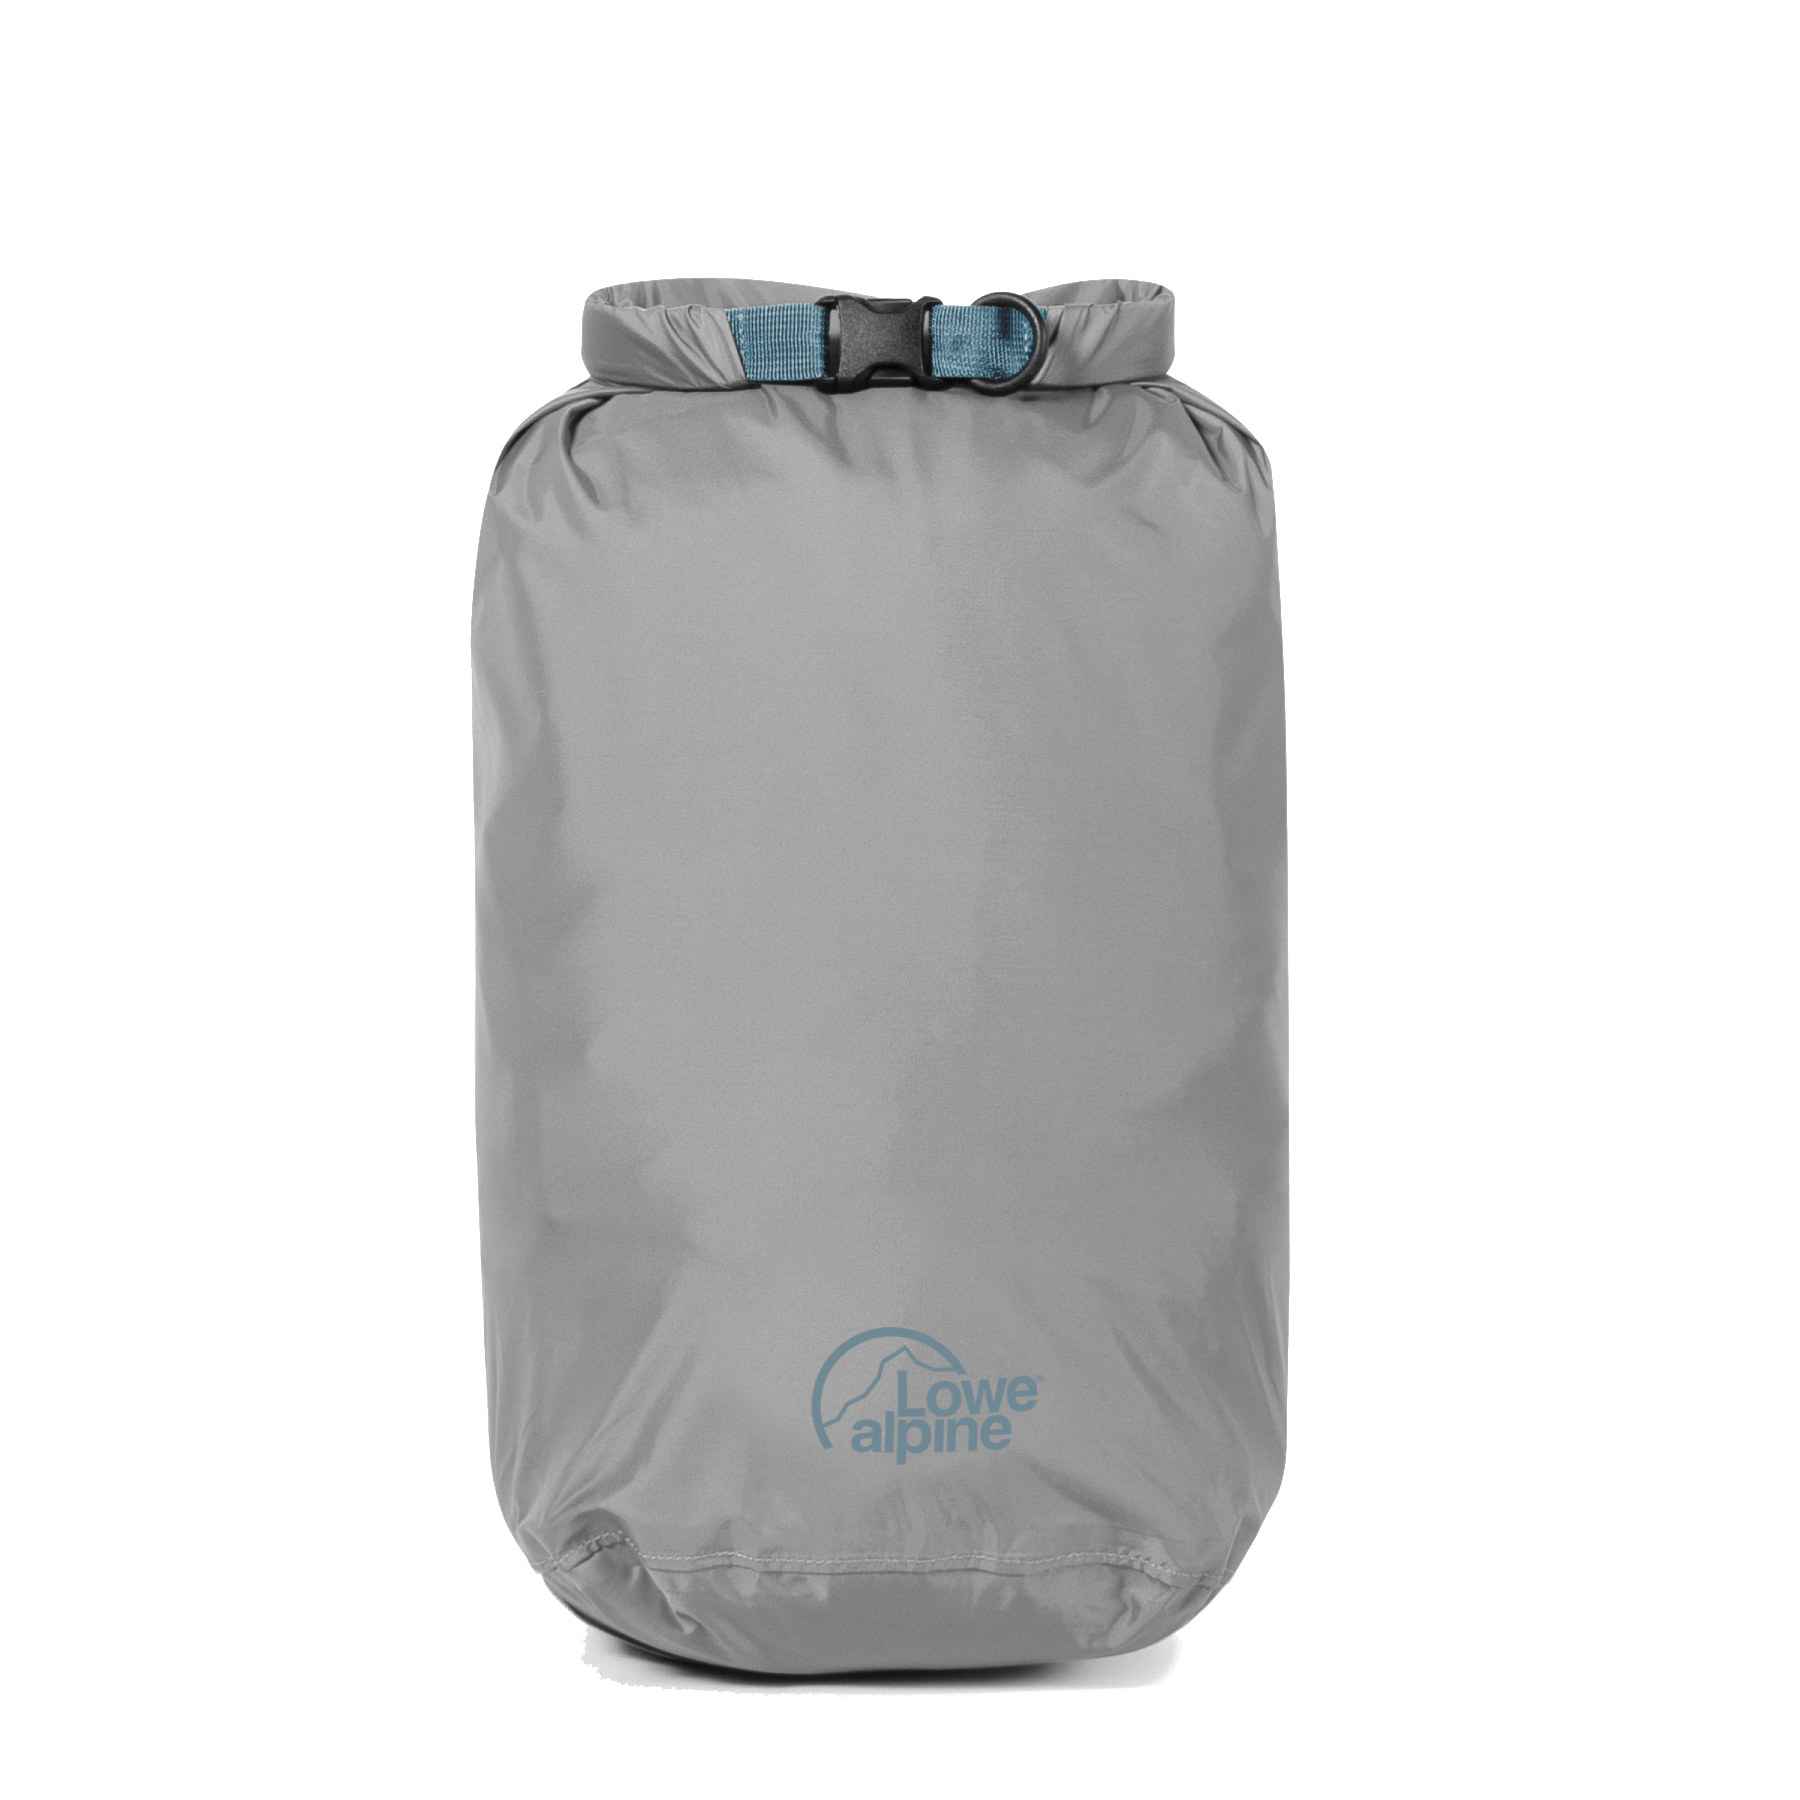 Productfoto van Lowe Alpine Dry Bag - 10L